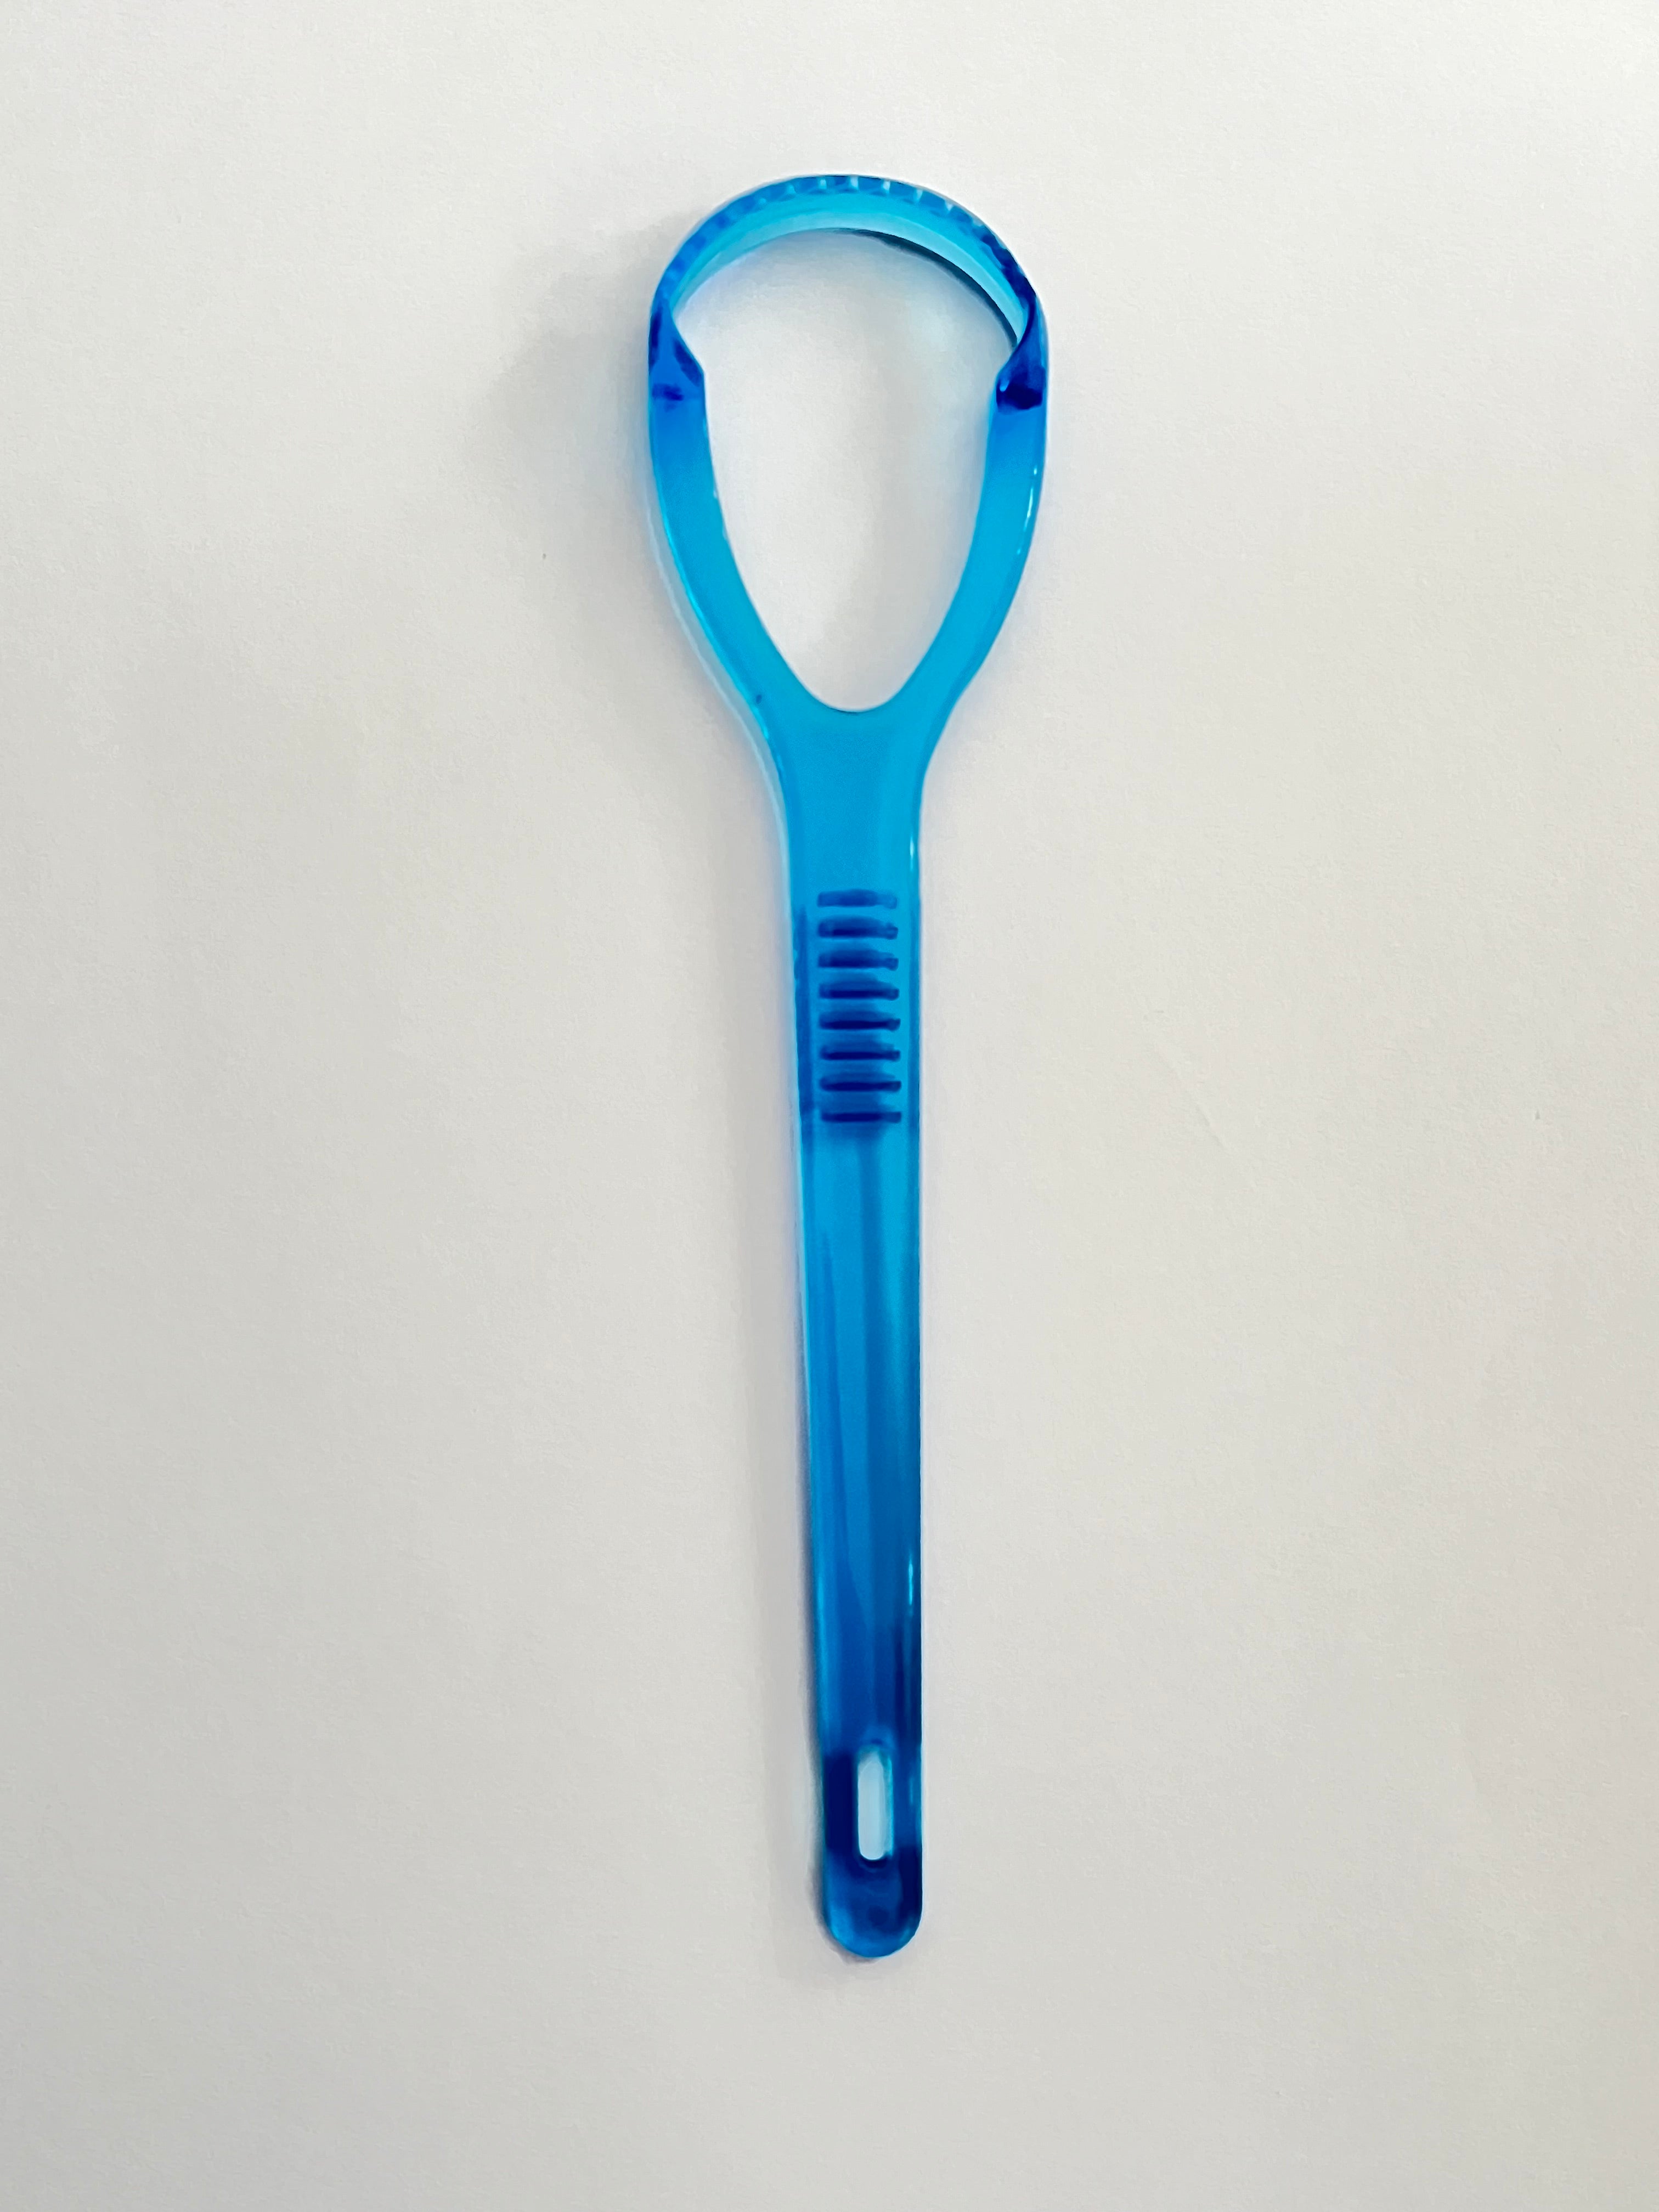 Hilo dental essential floss 50 metros – Deposito Dental Molar